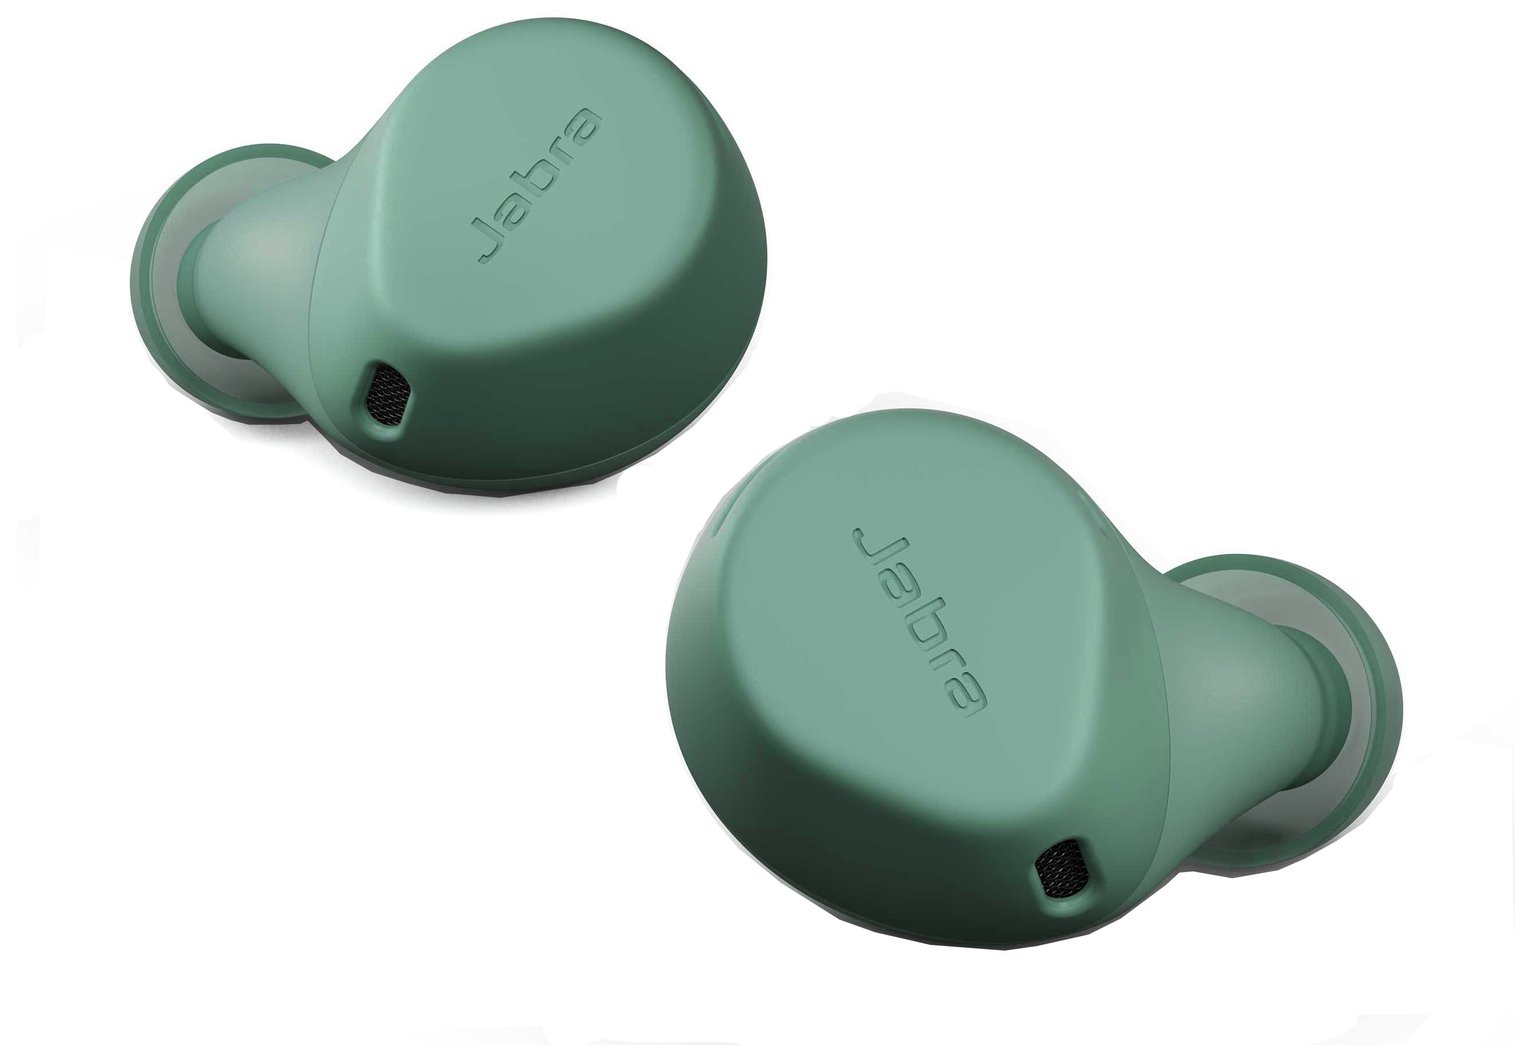 Jabra Elite 7 Active True Wireless ANC Sport Earbuds - Mint